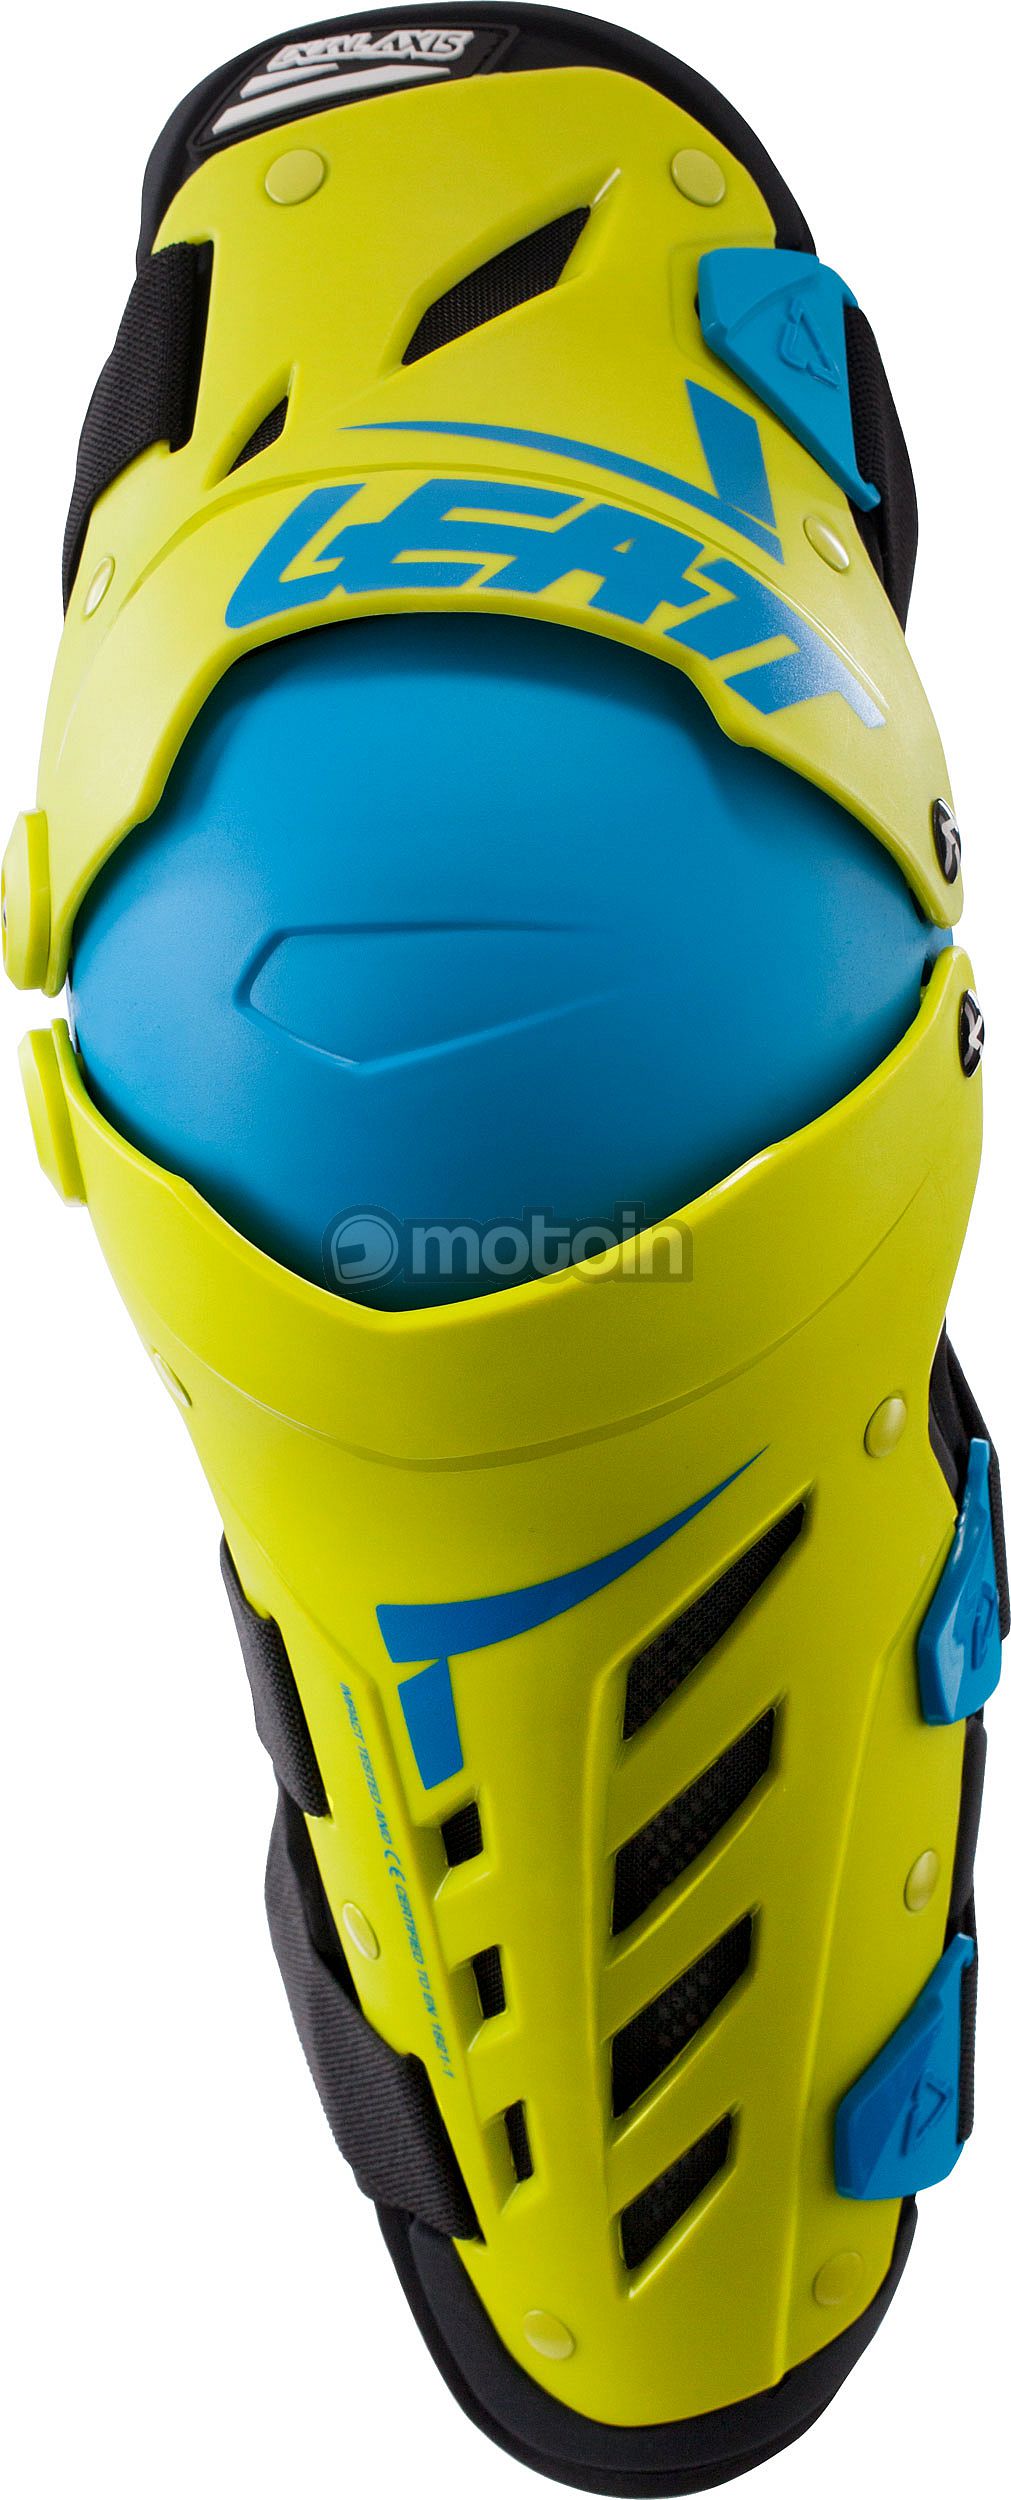 Leatt Dual Axis, knee protectors - motoin.de